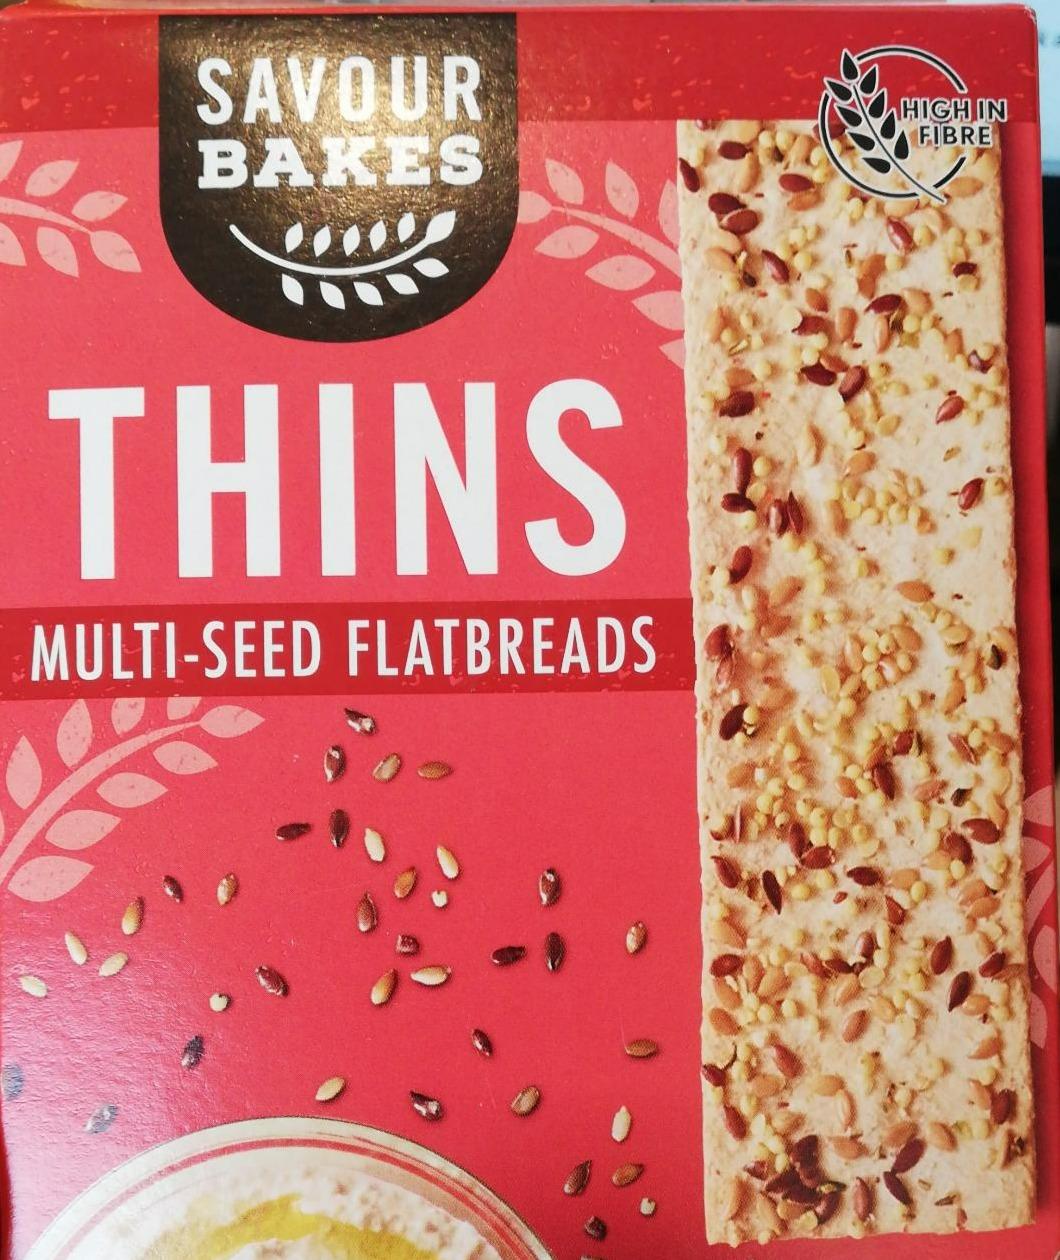 Fotografie - Thins multi-seed flatbreads Savour Bakes